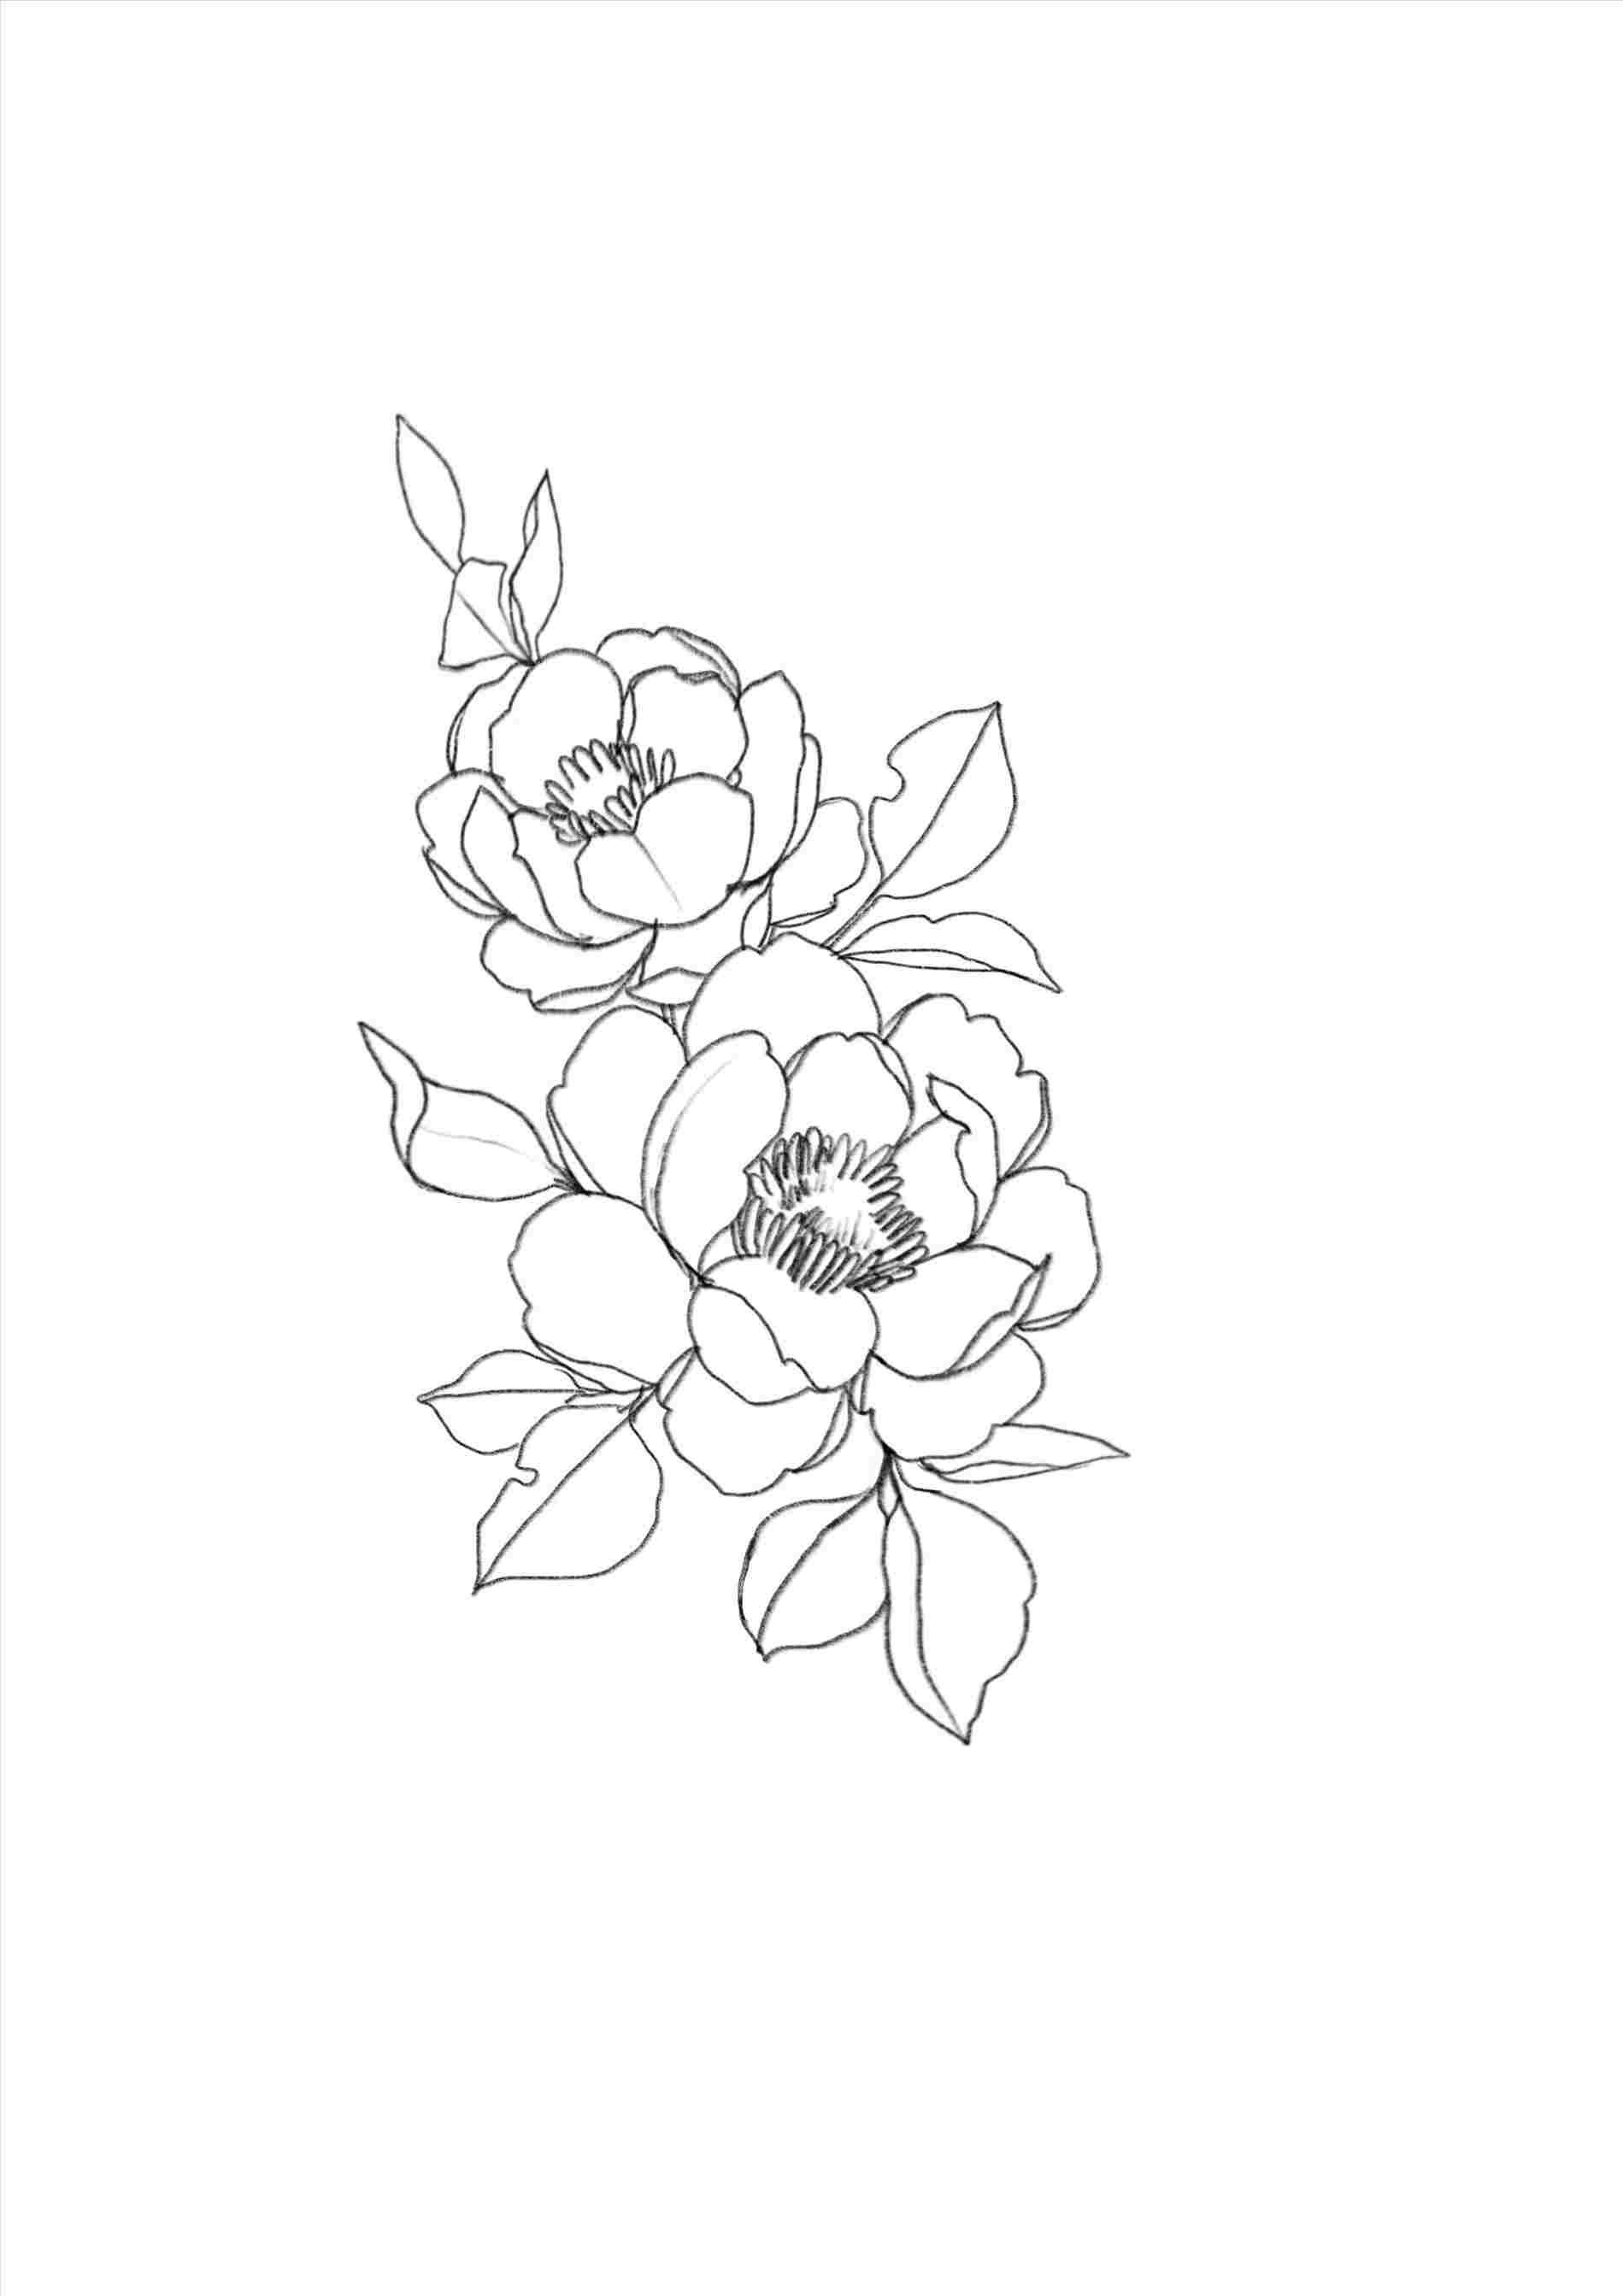 Minimalist Drawing Aesthetic Wallpaper. Minimalist Aesthetic Flower Drawings